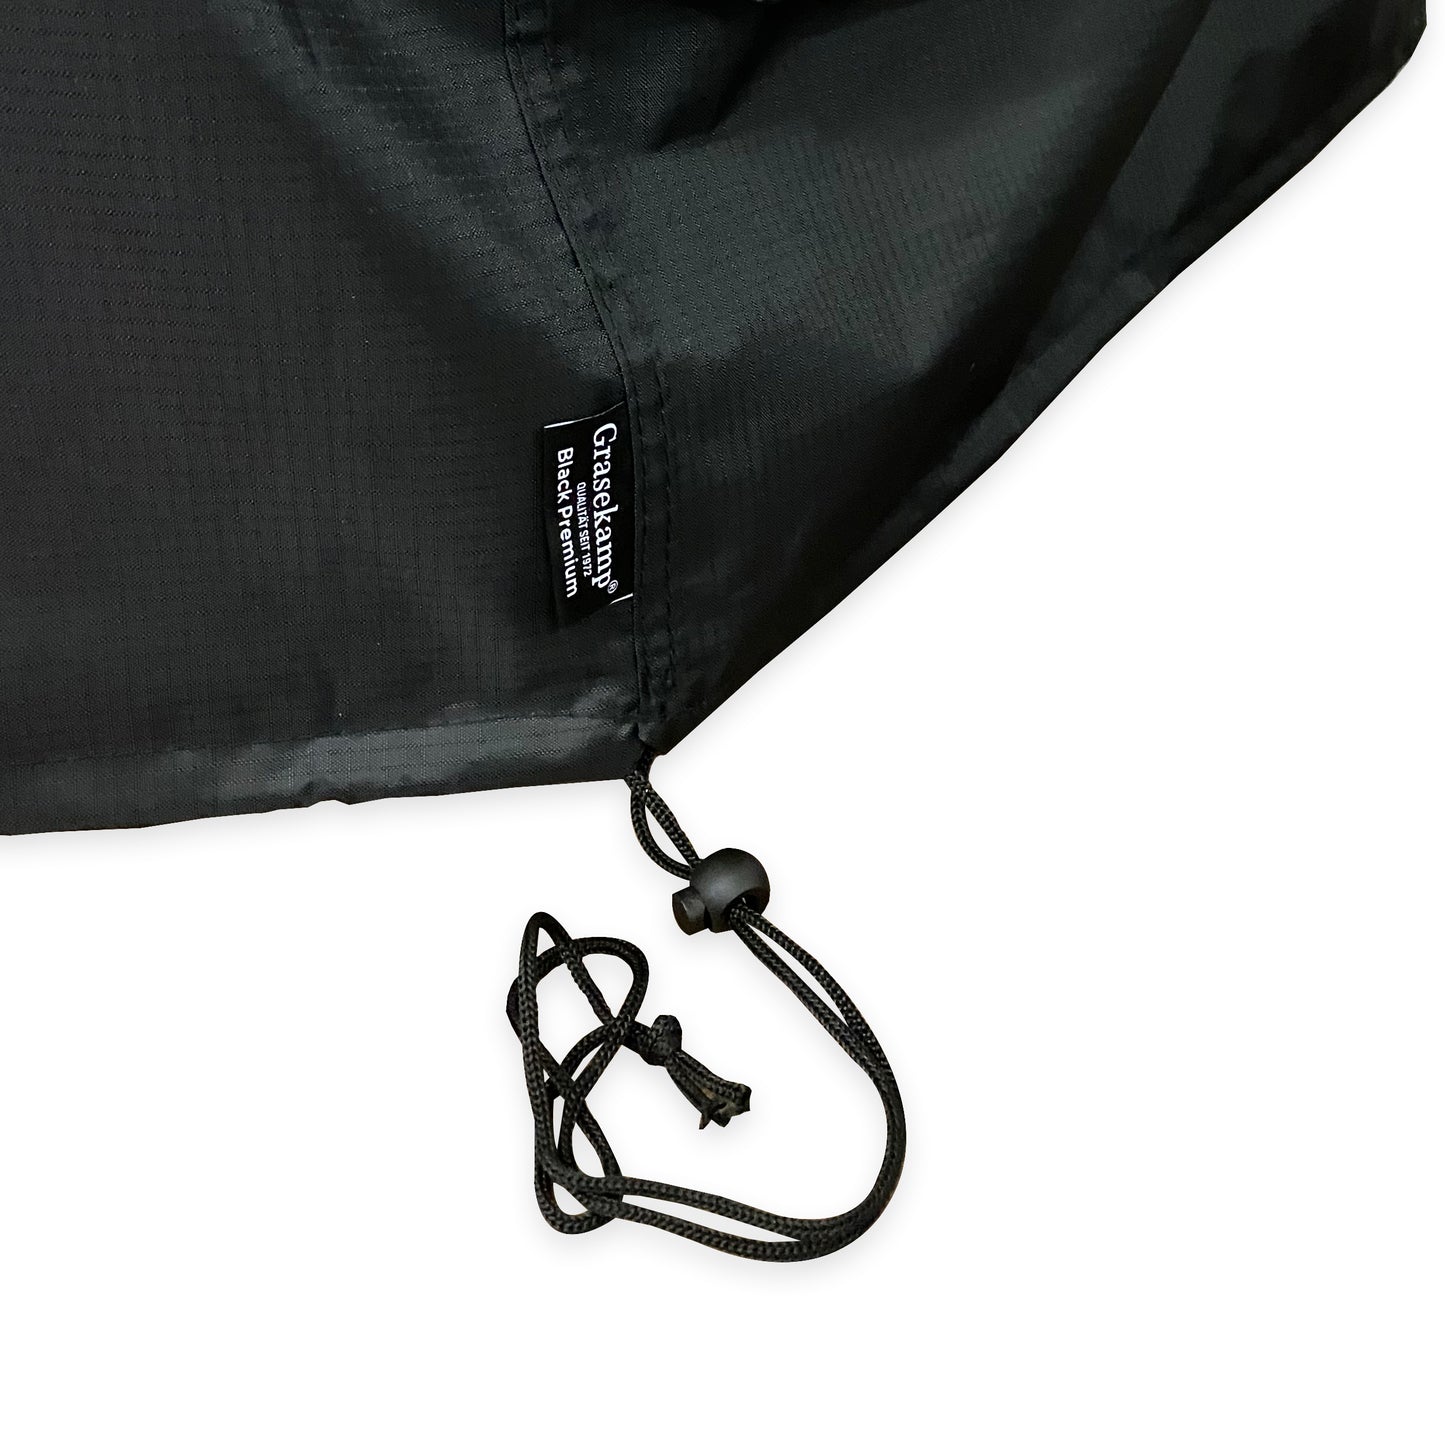 Black Premium Kissenschutztasche  125x32x50cm / protective bag /  atmungsaktiv / breathable